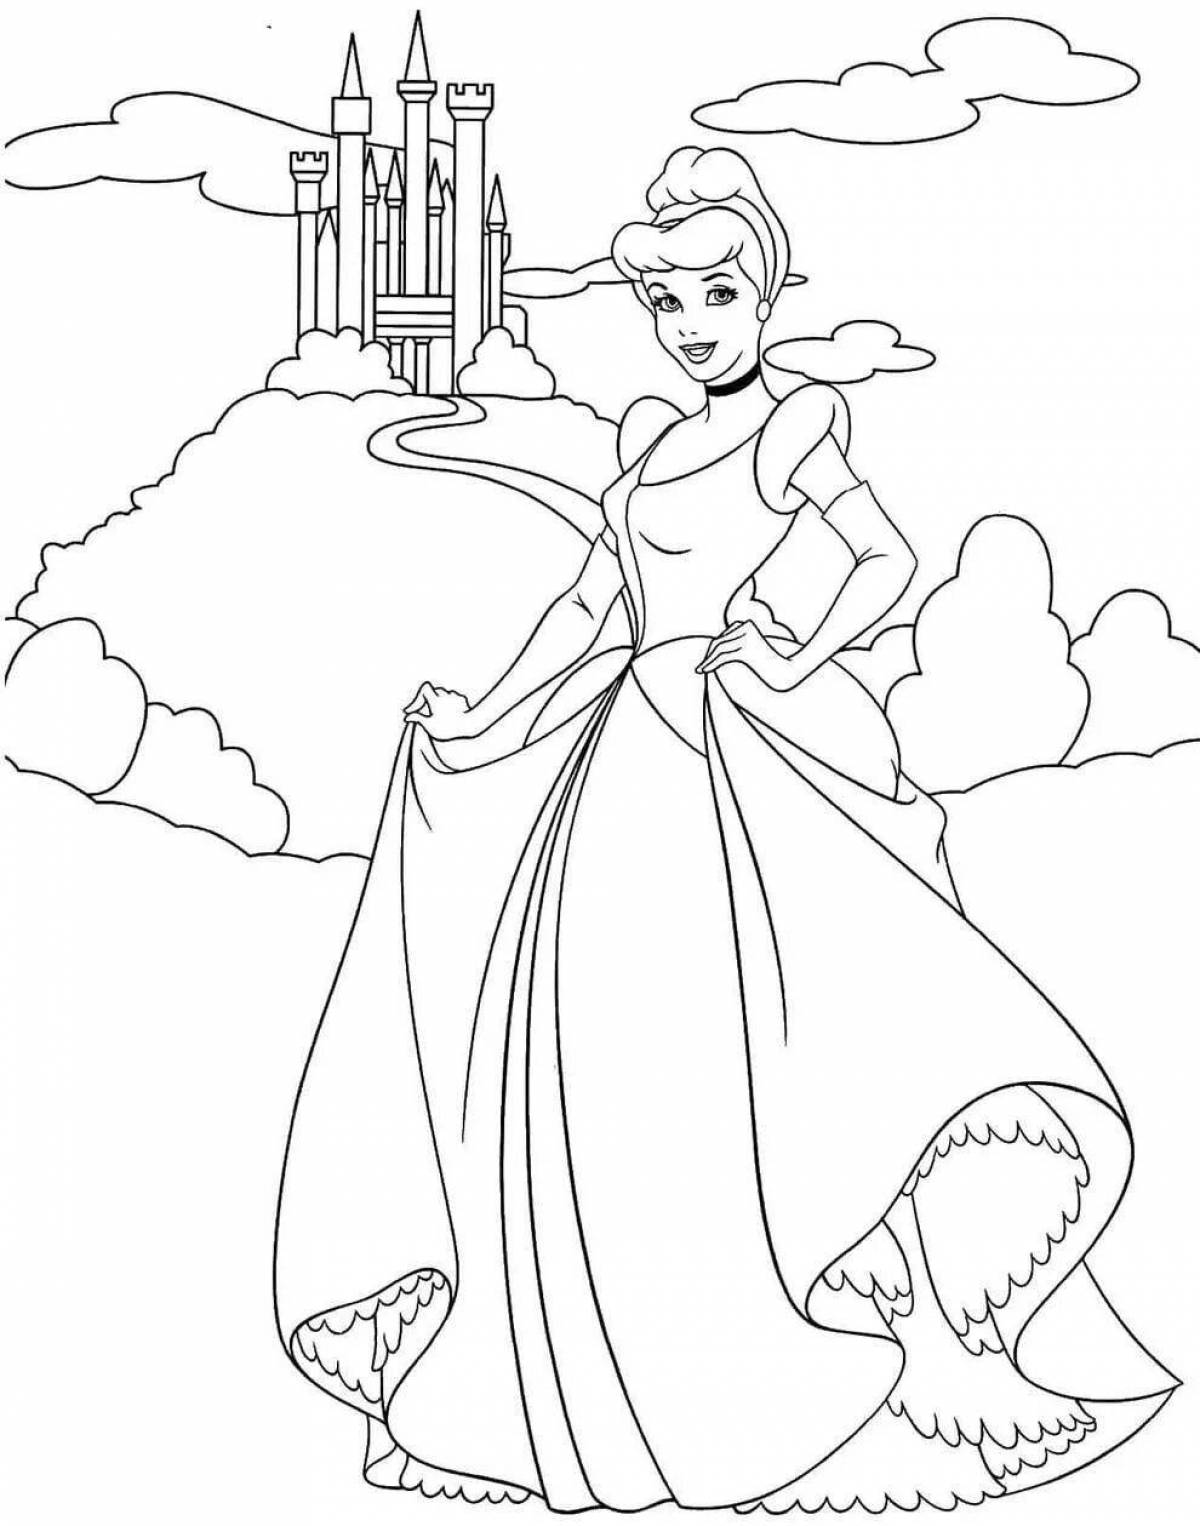 Glamor coloring book for girls princess castle